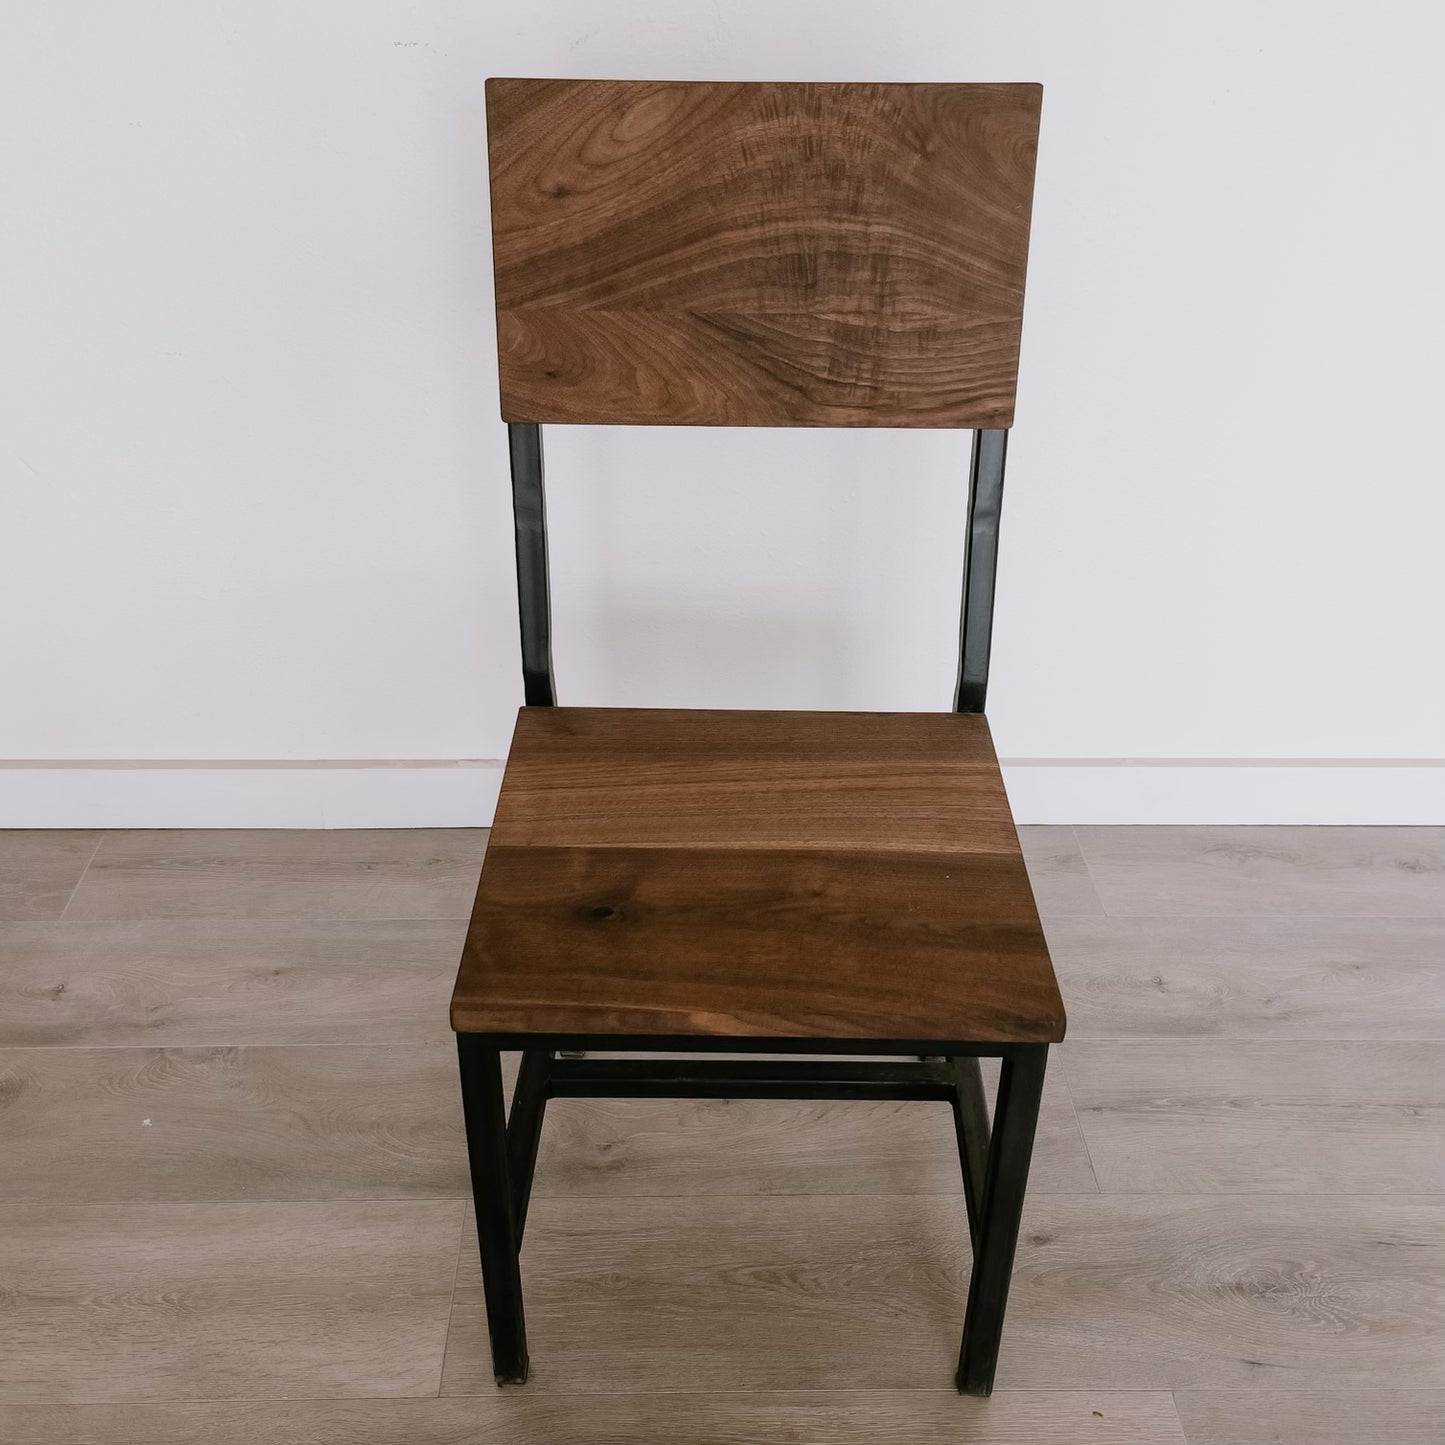 The Sedona Chair